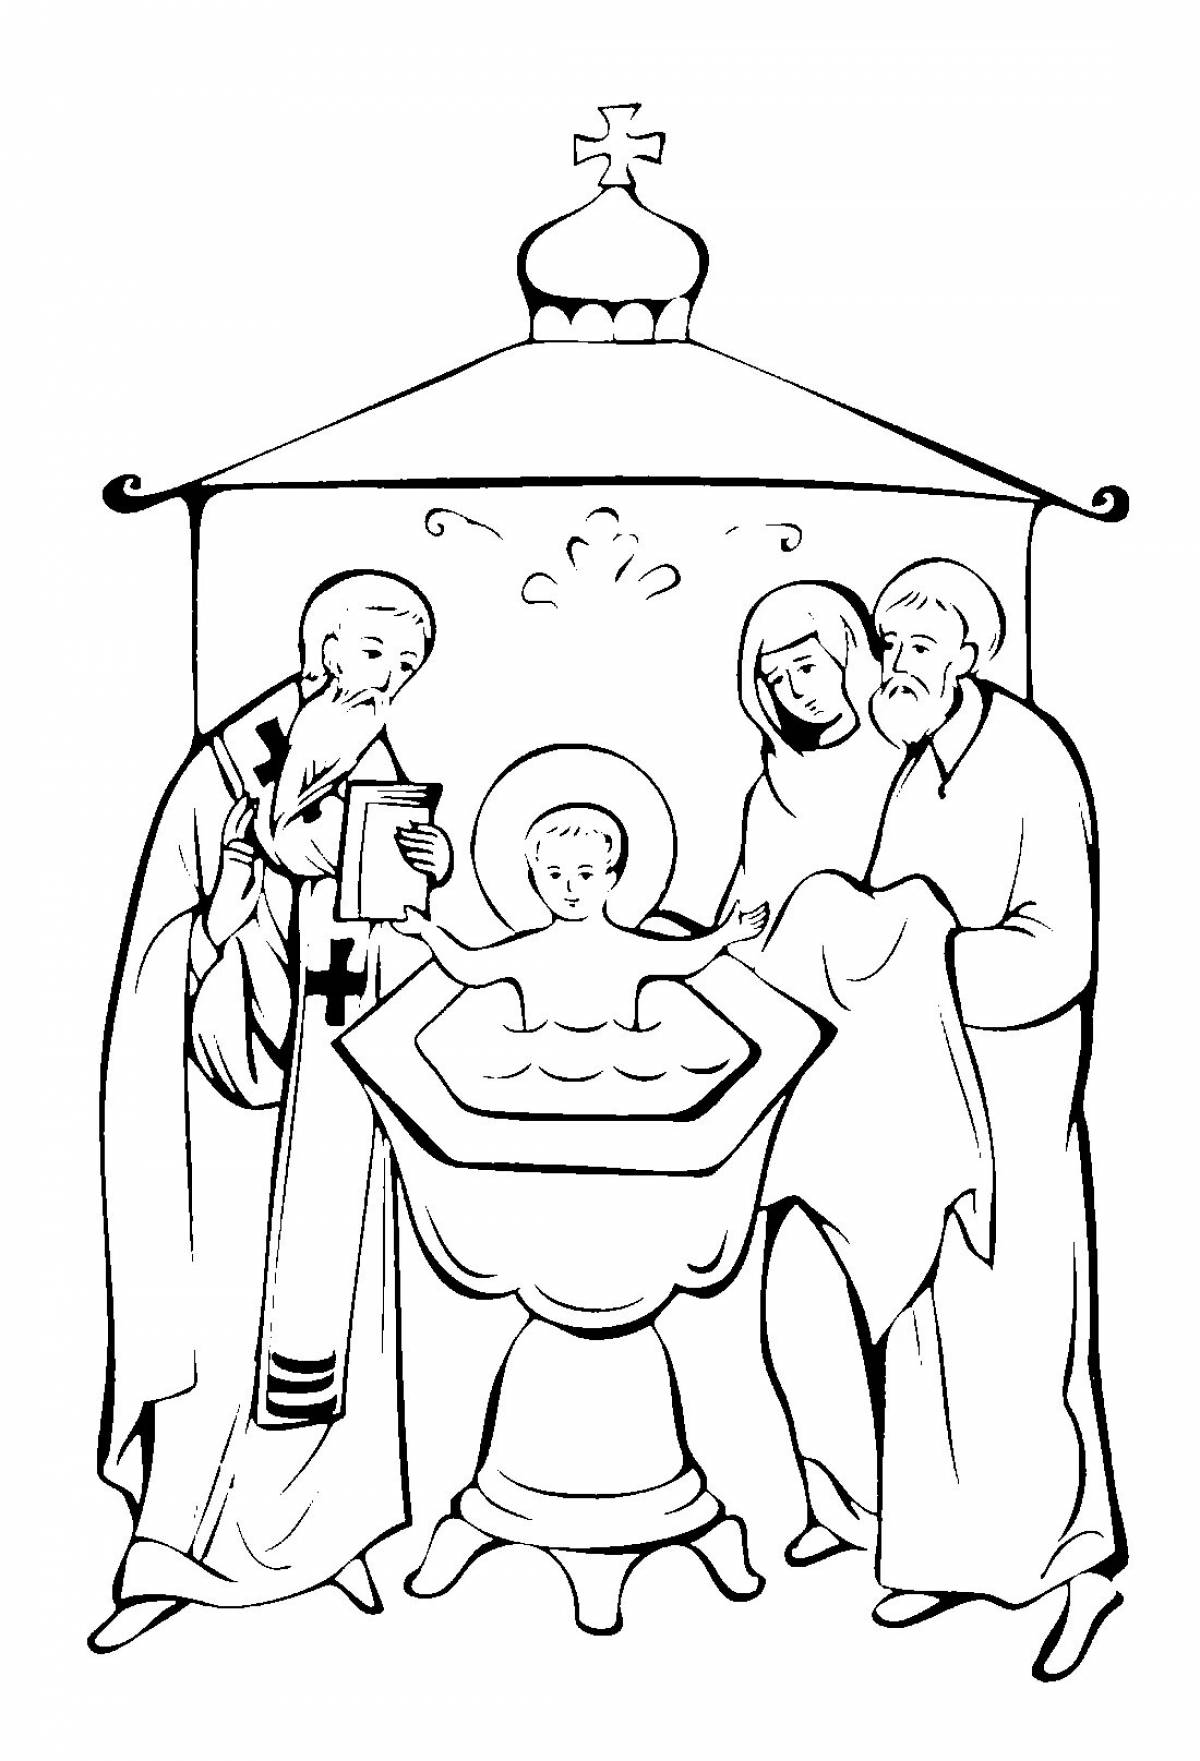 On baptism #2